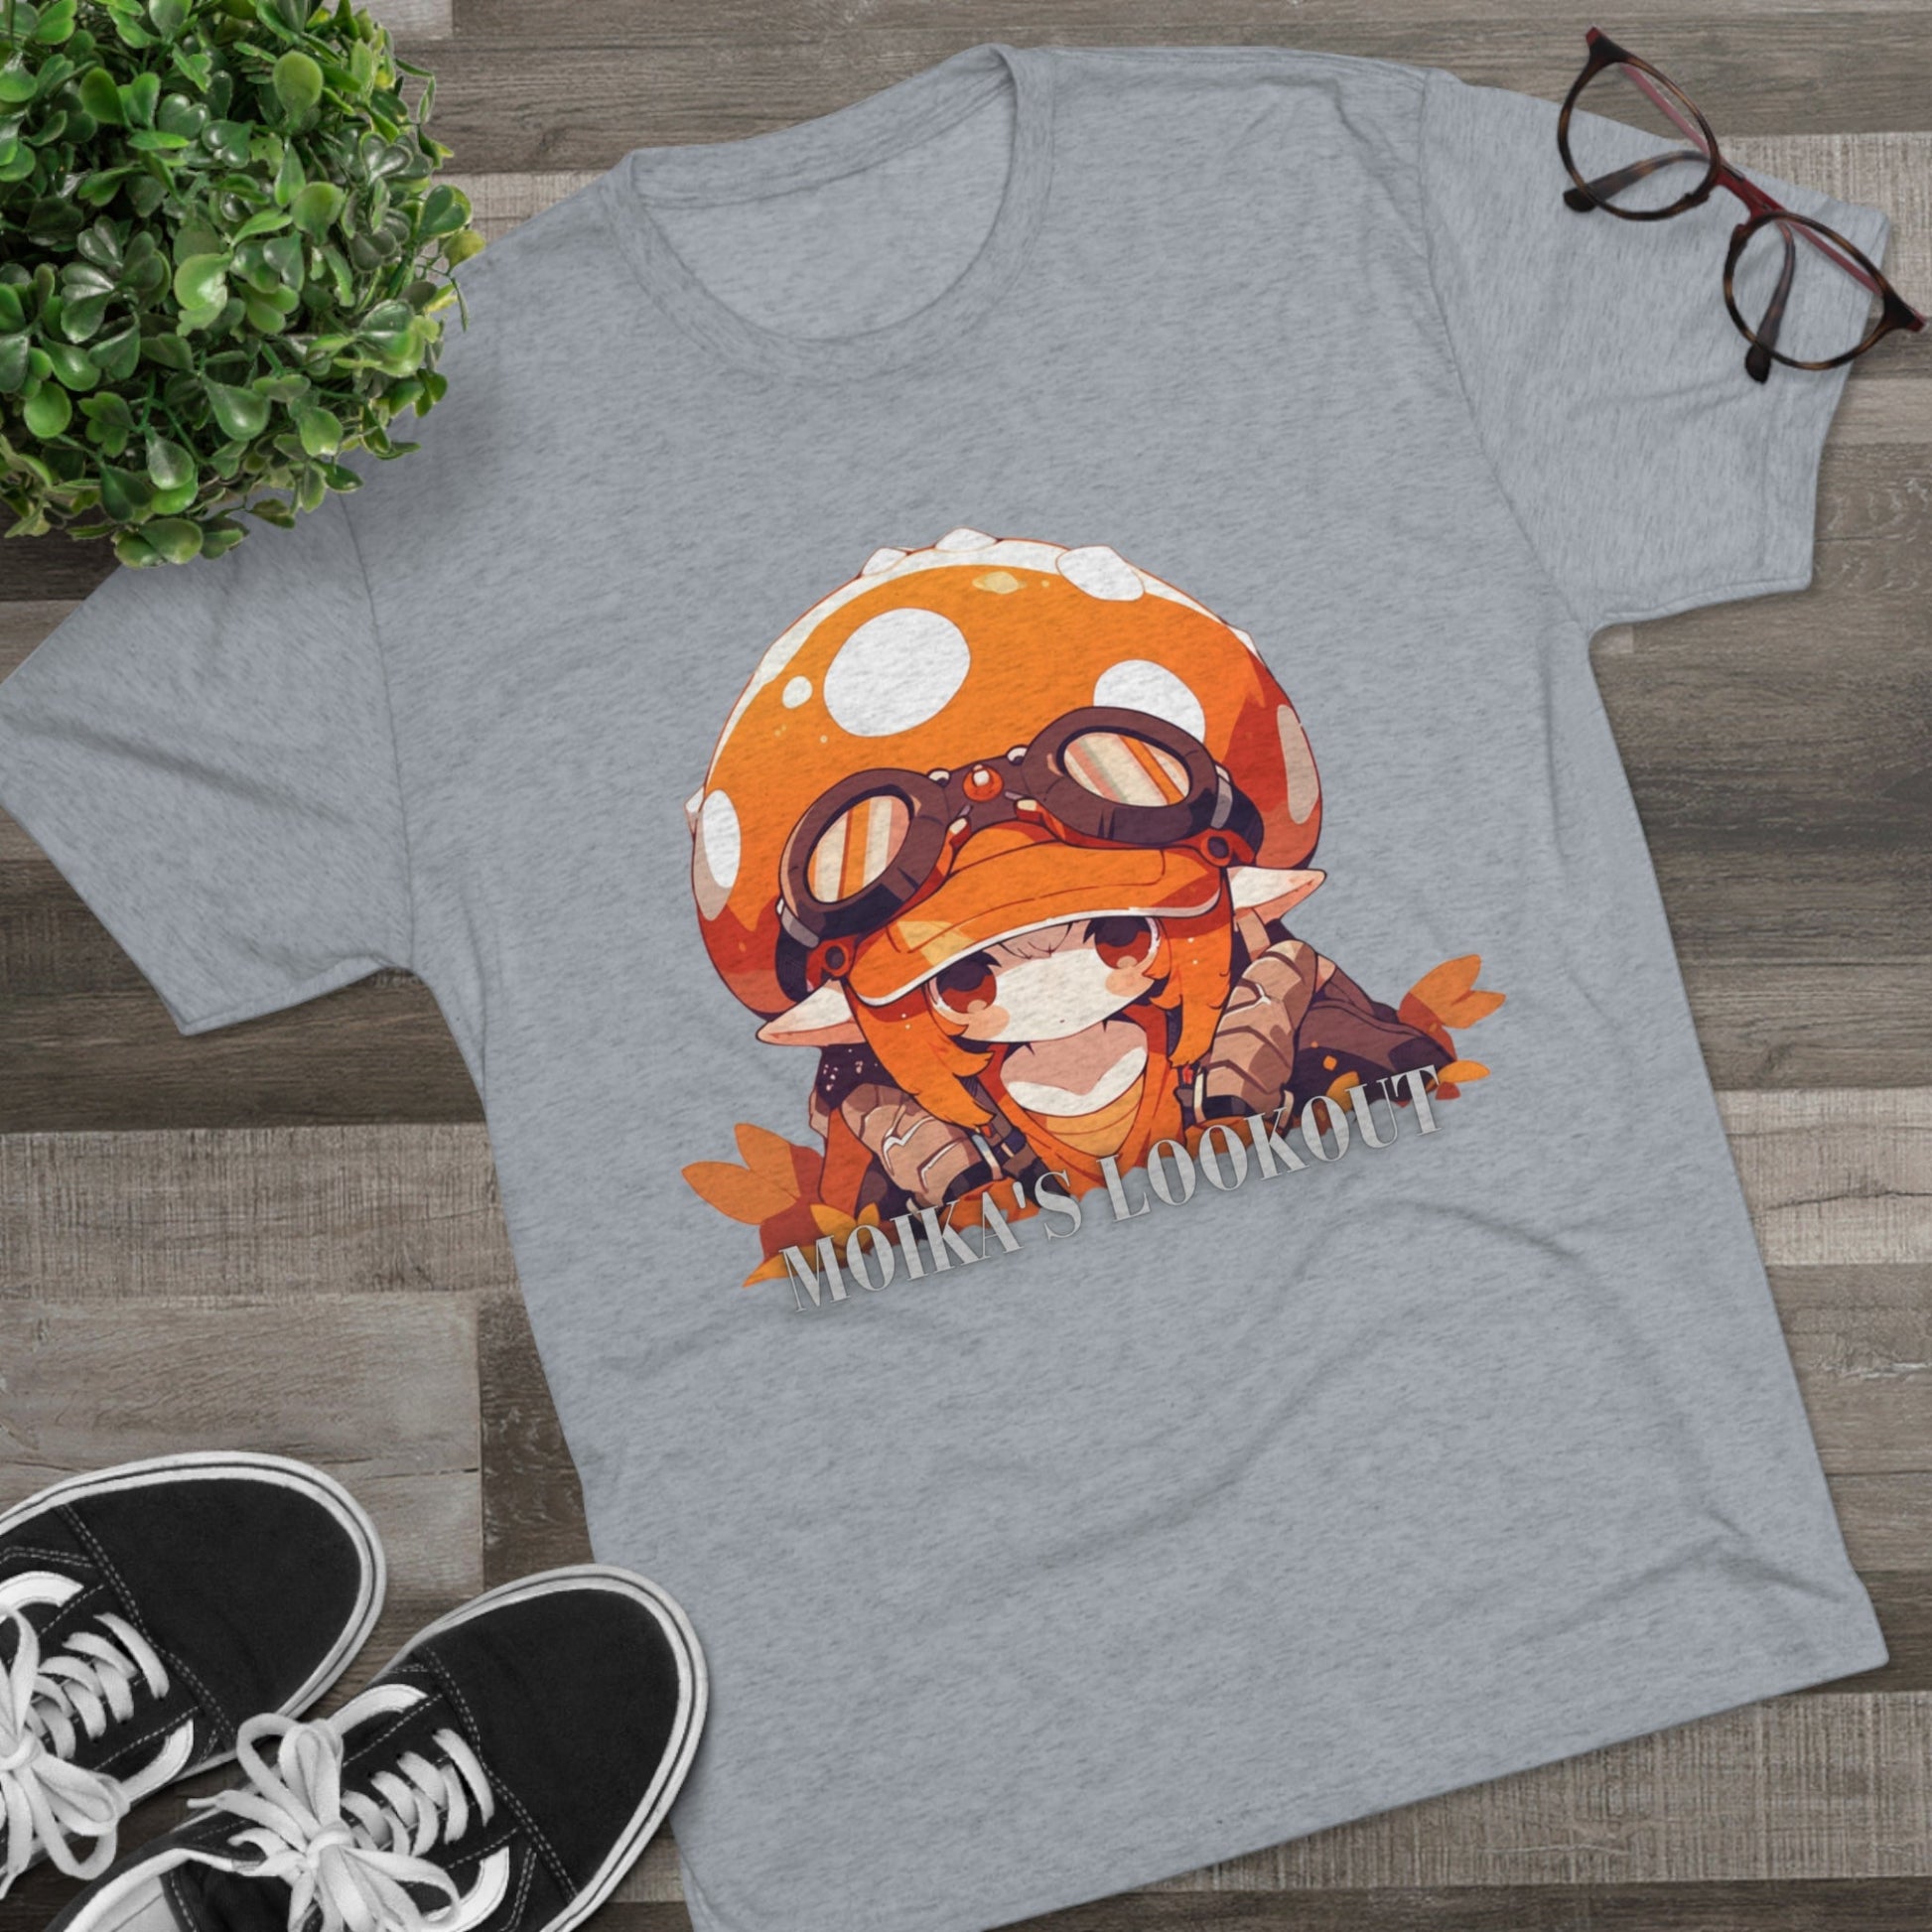 T-Shirt | Mushroom Man Shirt | Anime Shirt | Premium Unisex Tri-Blend Crew Tee | Moika's Lookout | - Moikas